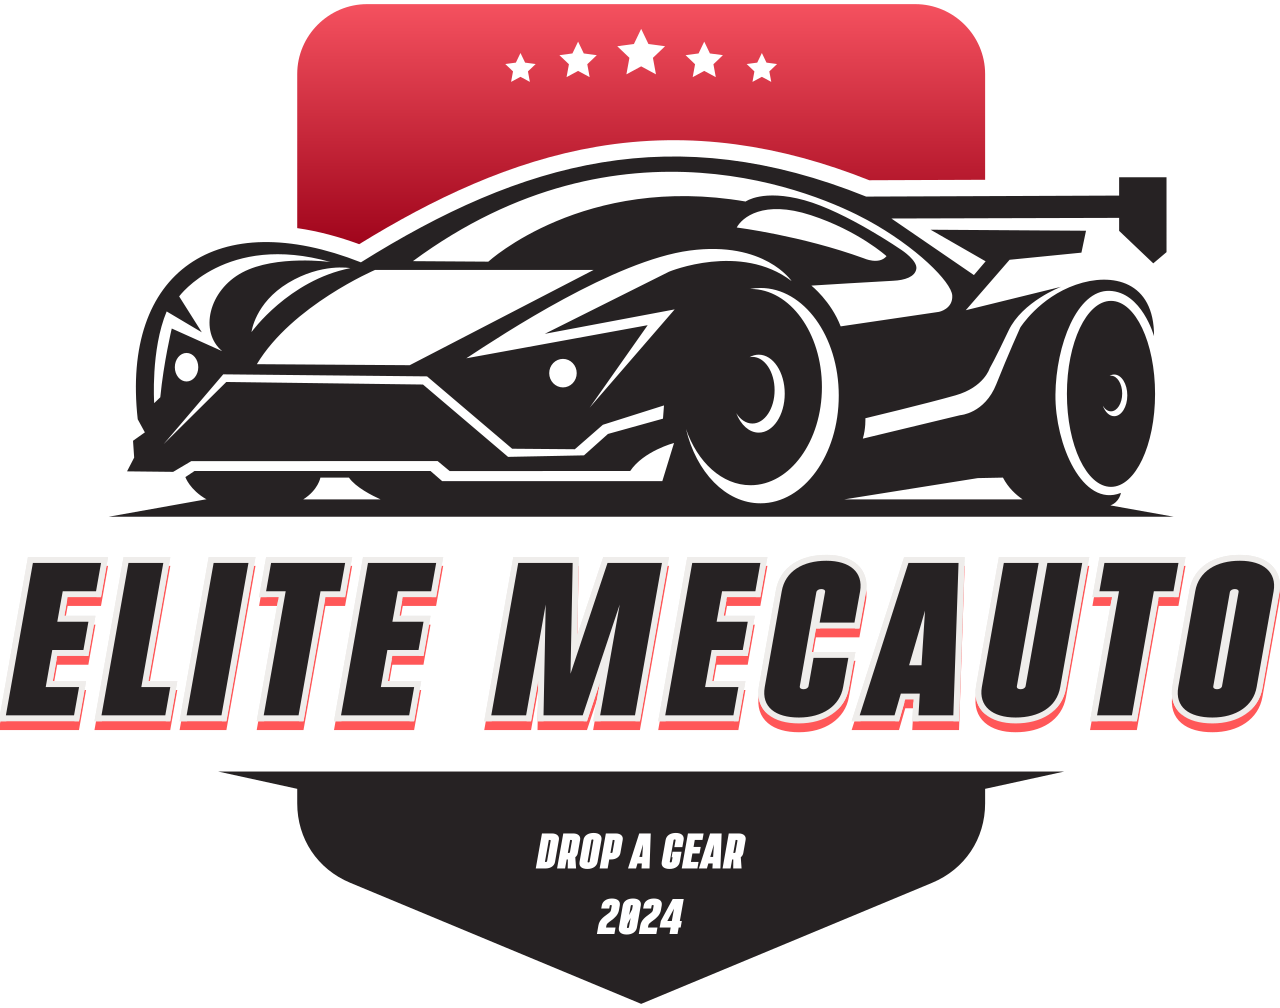 ELITE MECAUTO's logo